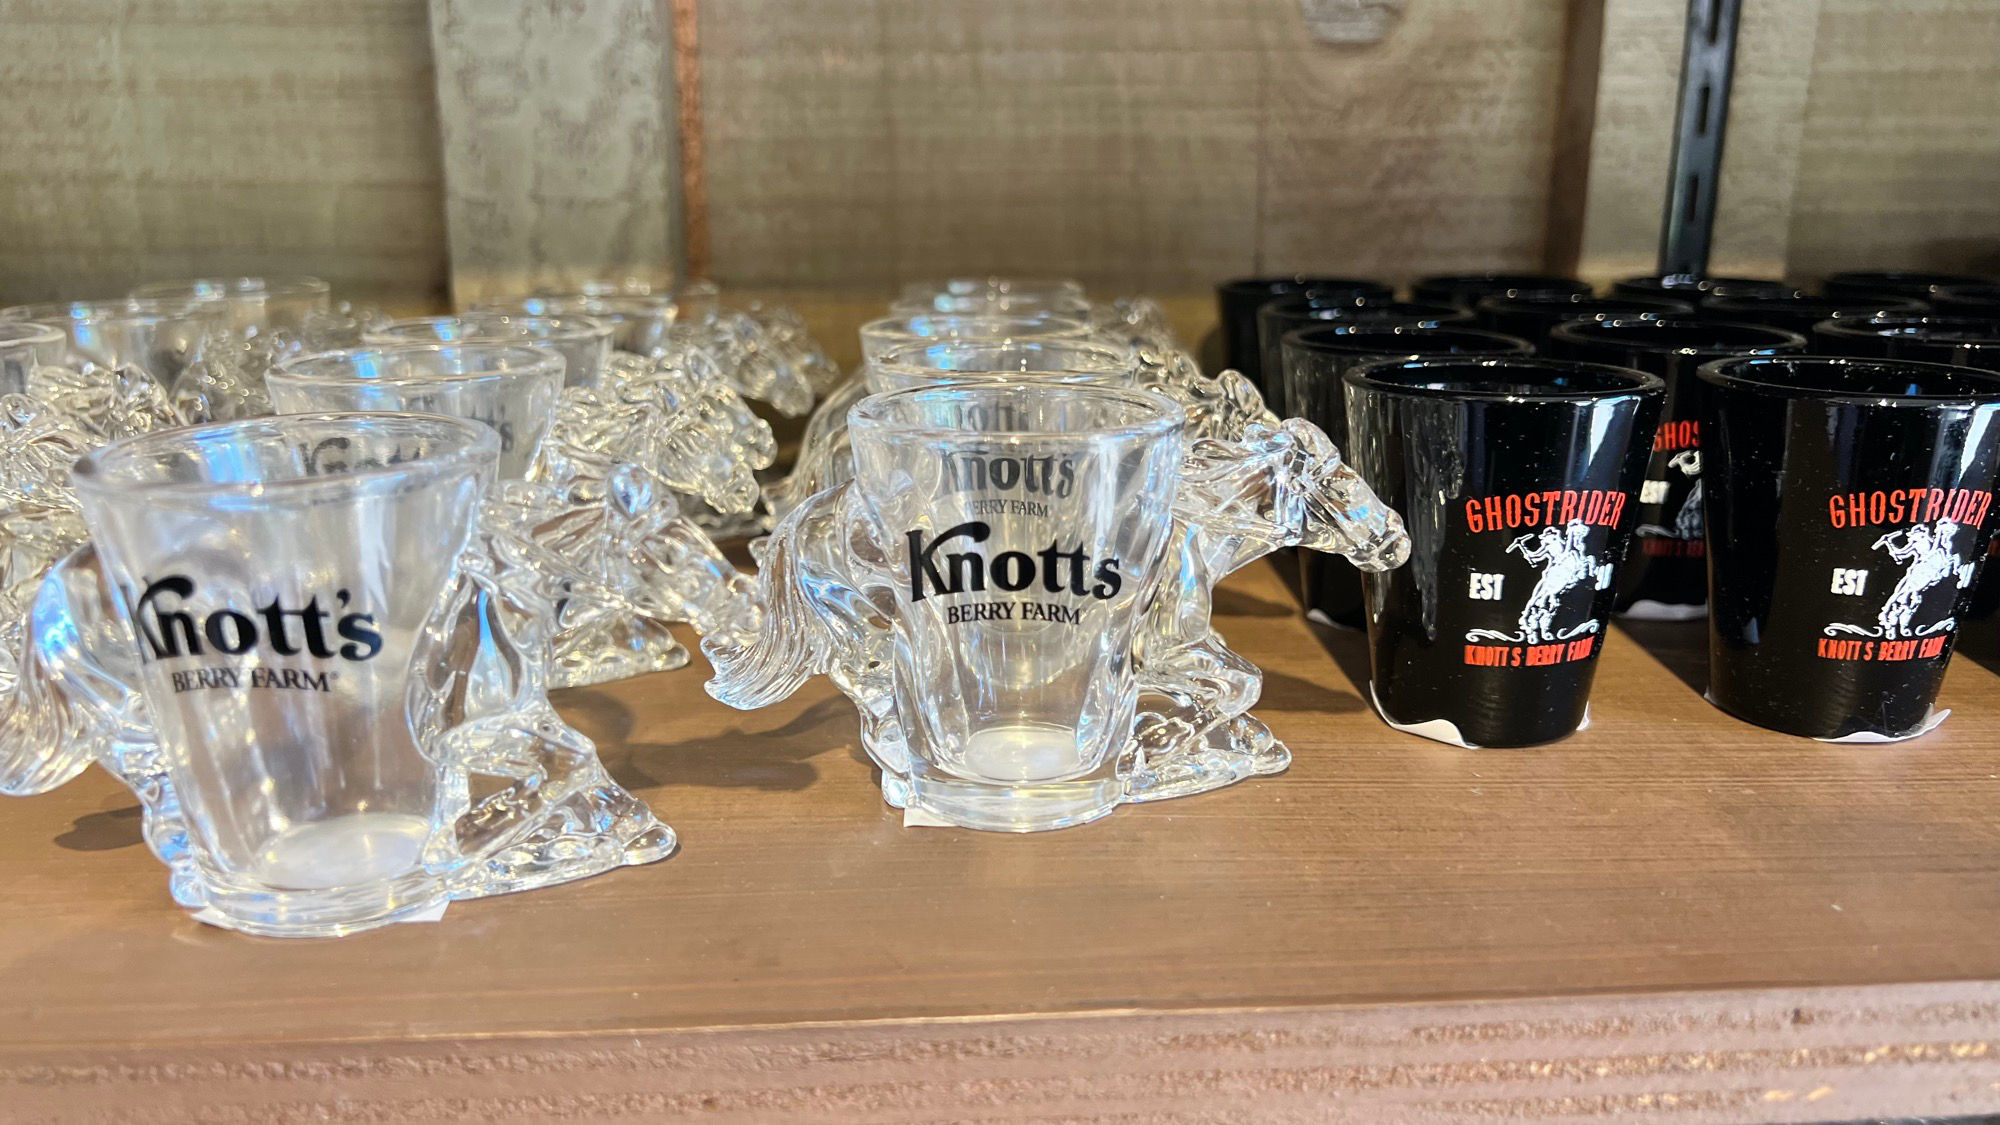 Ghostrider Goods Knott's Shot Glasses